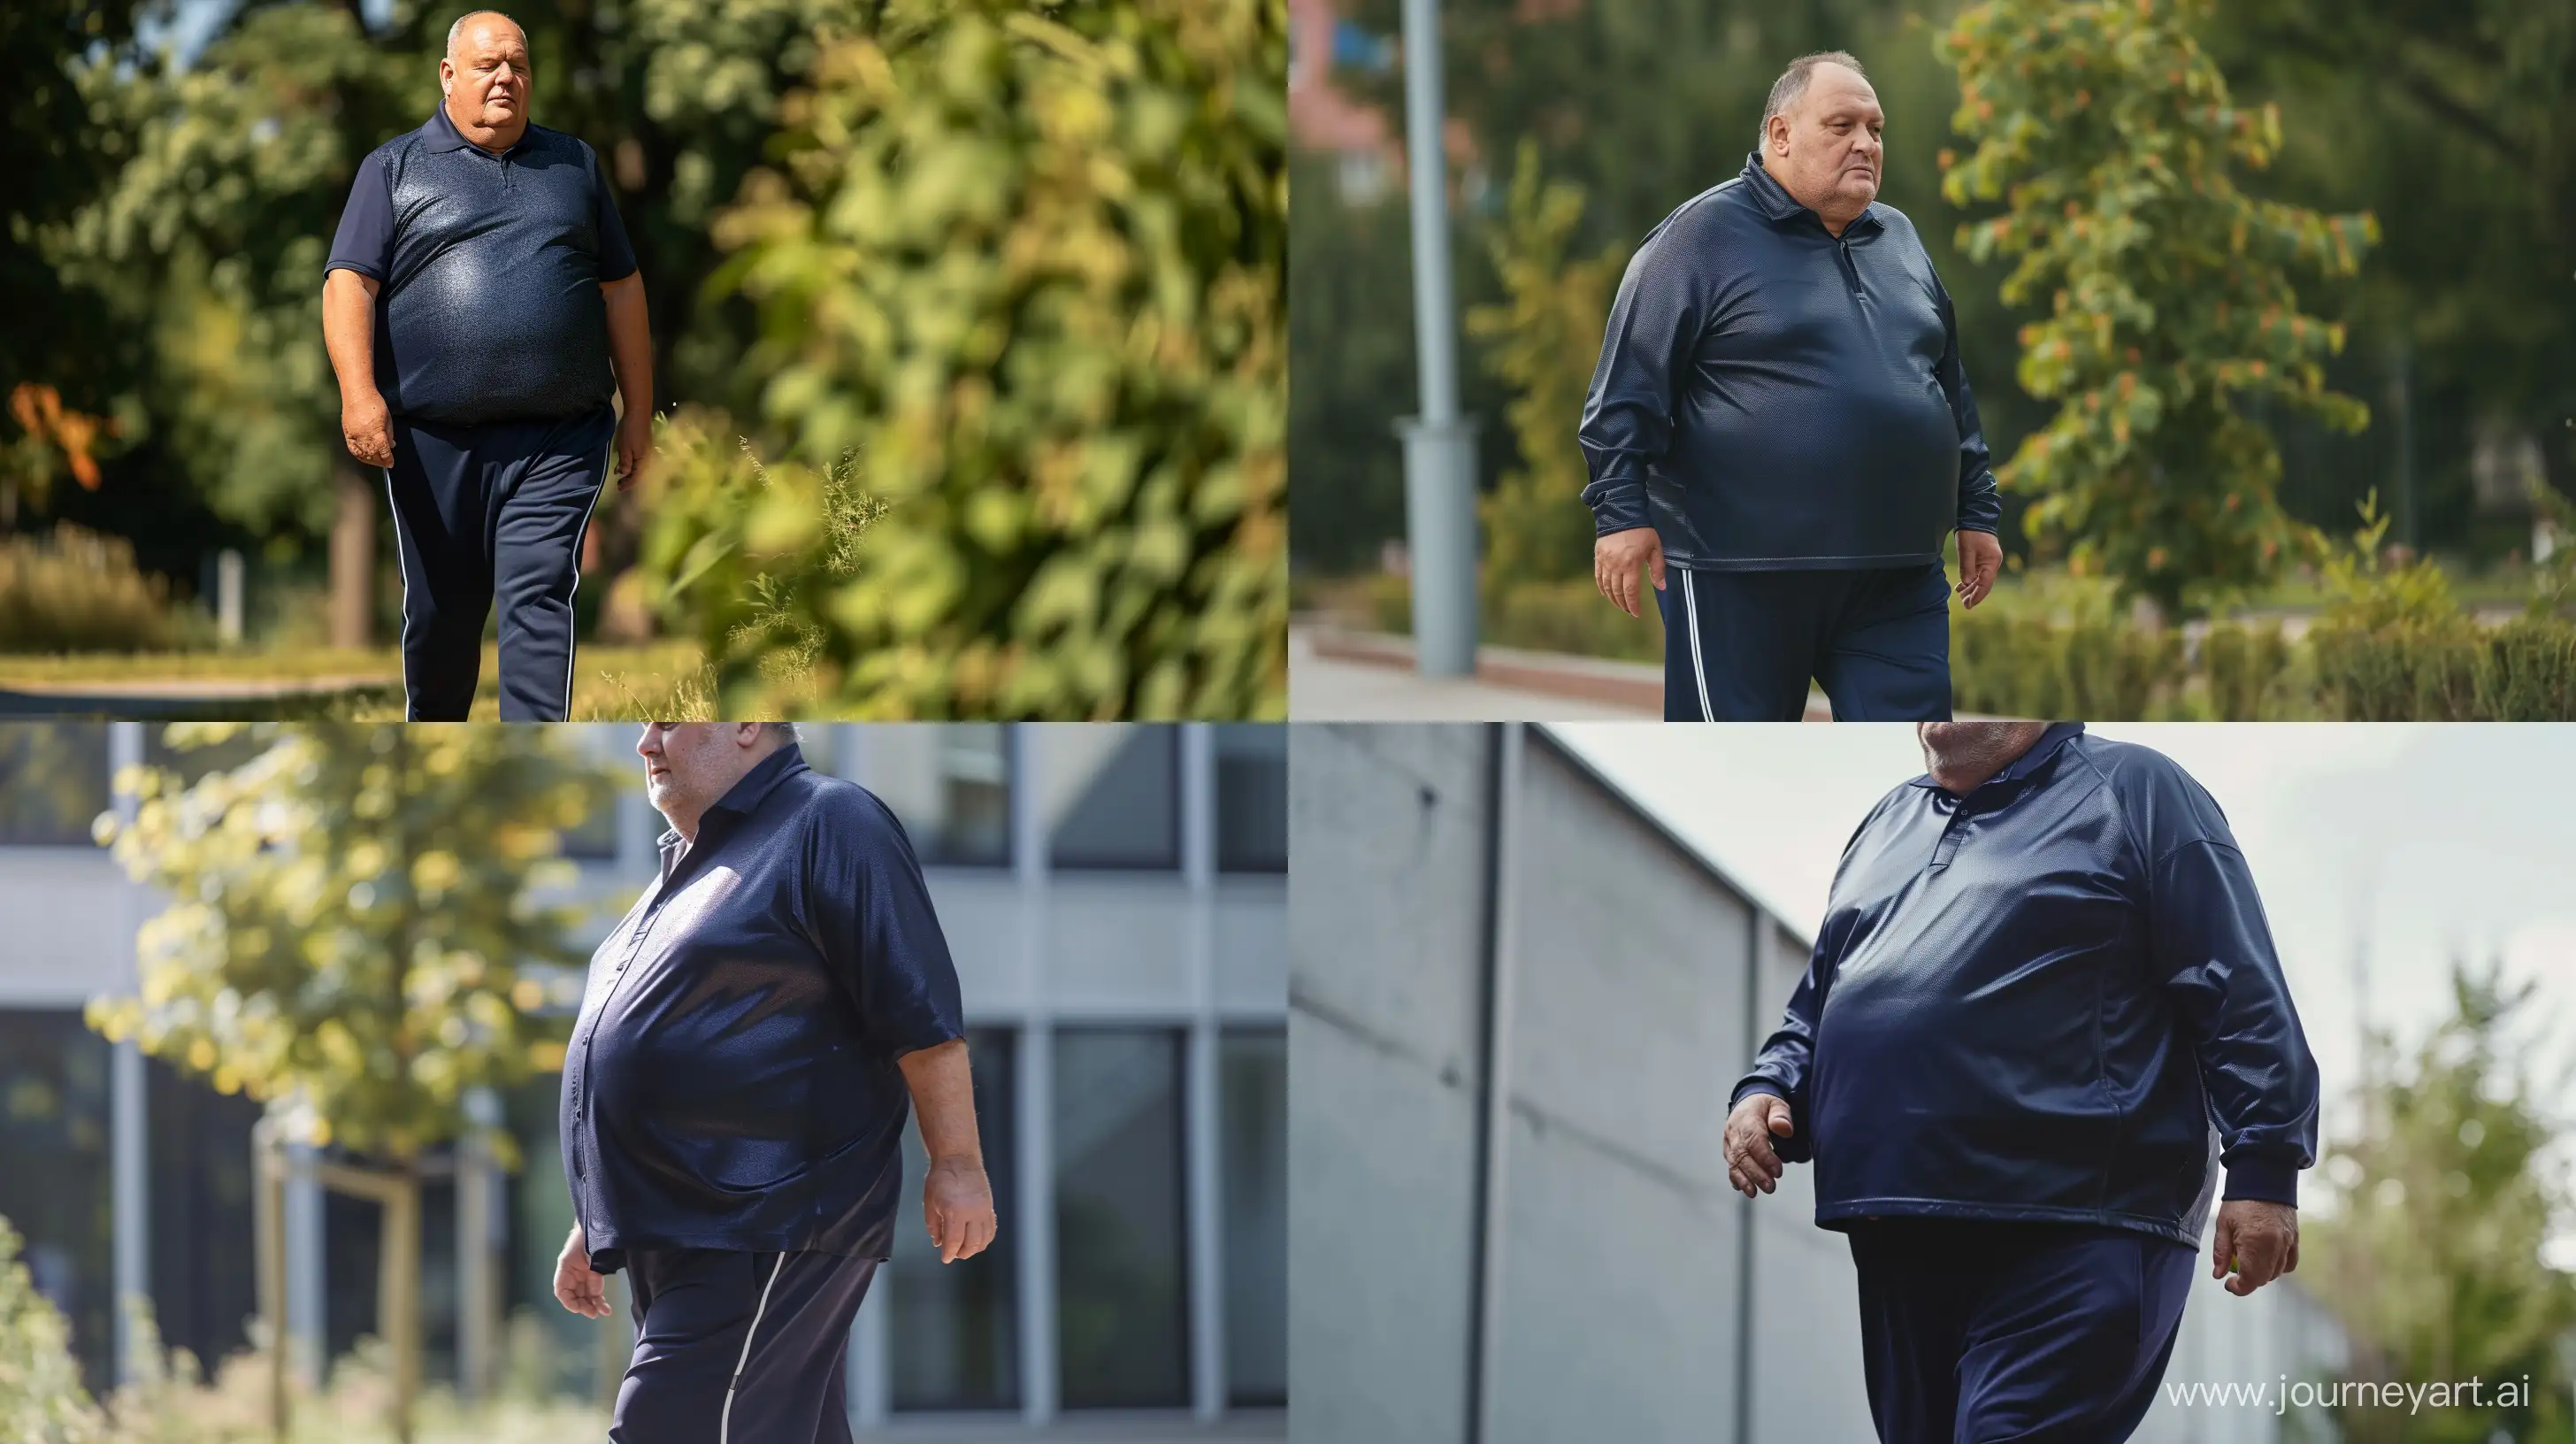 Elderly-Gentleman-Strolling-Outdoors-in-Comfortable-Navy-Sport-Shirt-and-Tracksuit-Pants